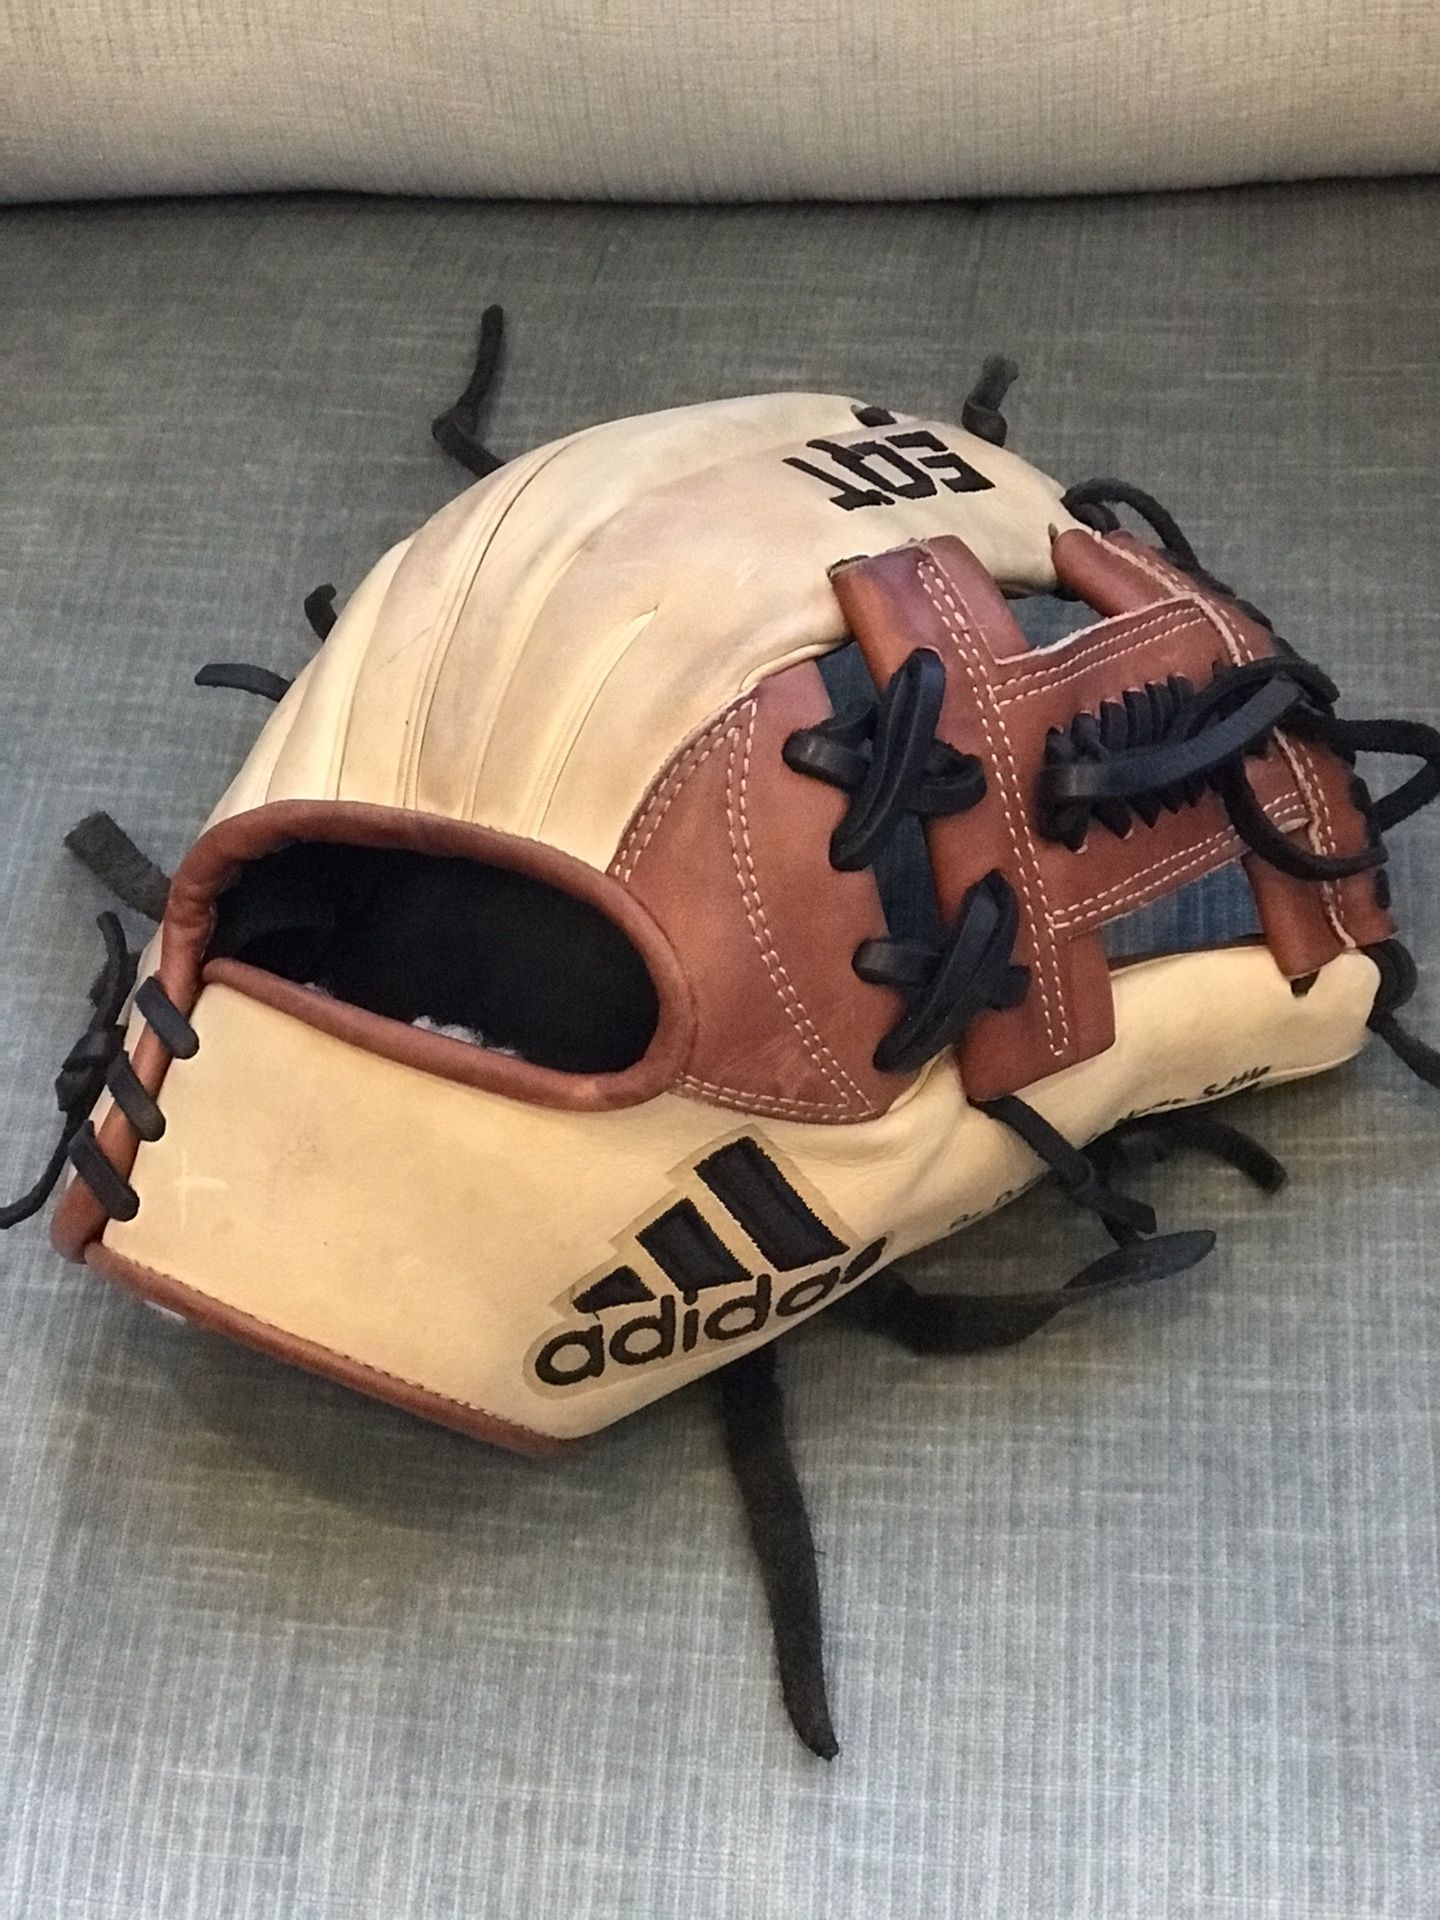 Adidas EQT Pro 11.5” baseball glove